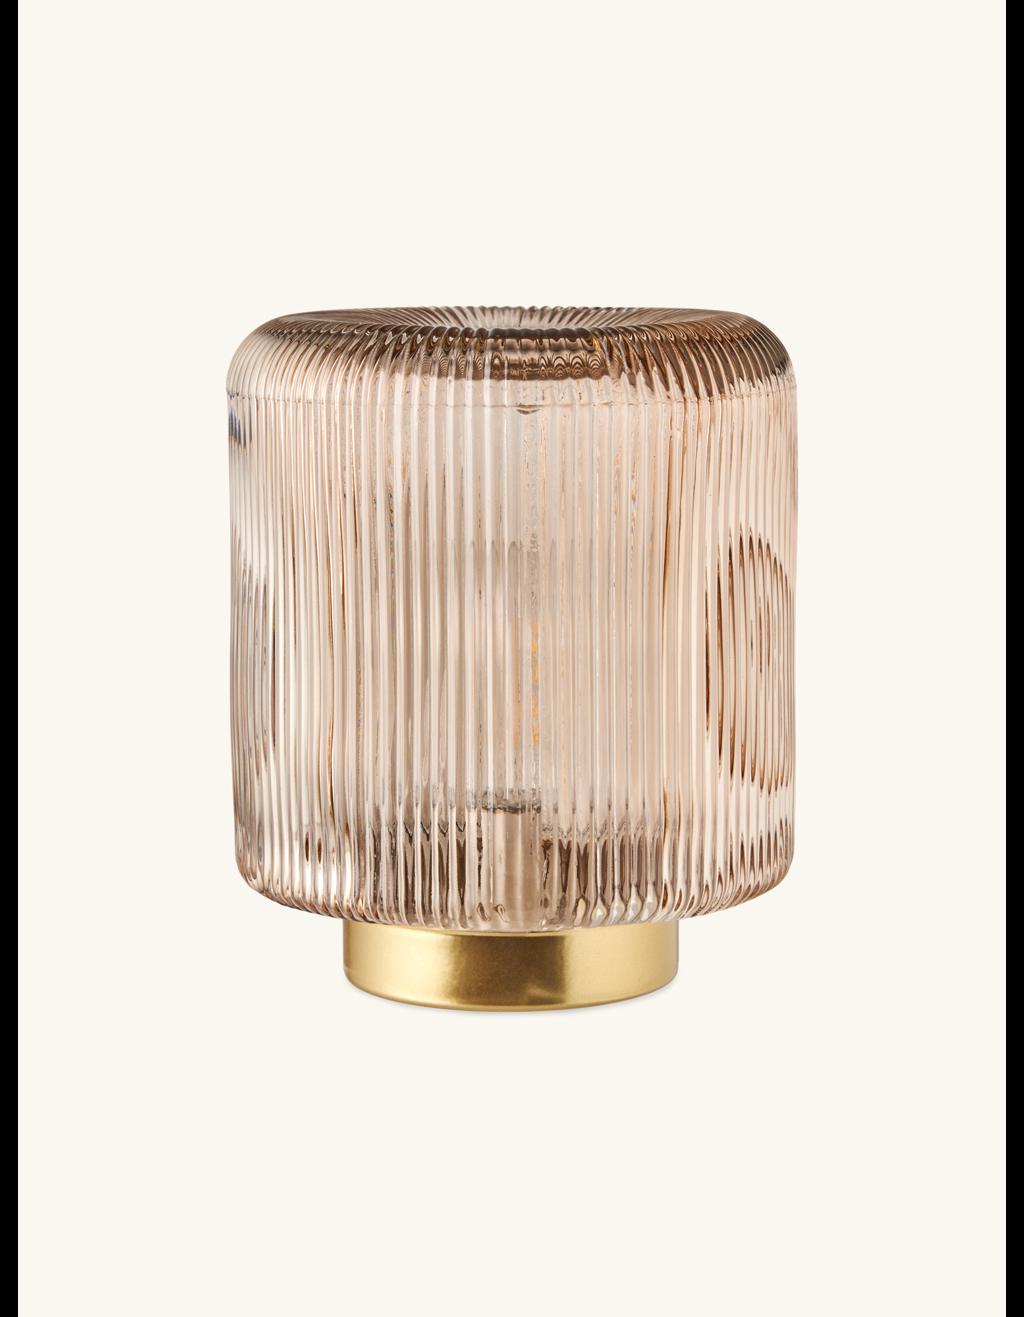 Home - LED lamp - Iron/glass. Ø16.3 x 14.8 cm.